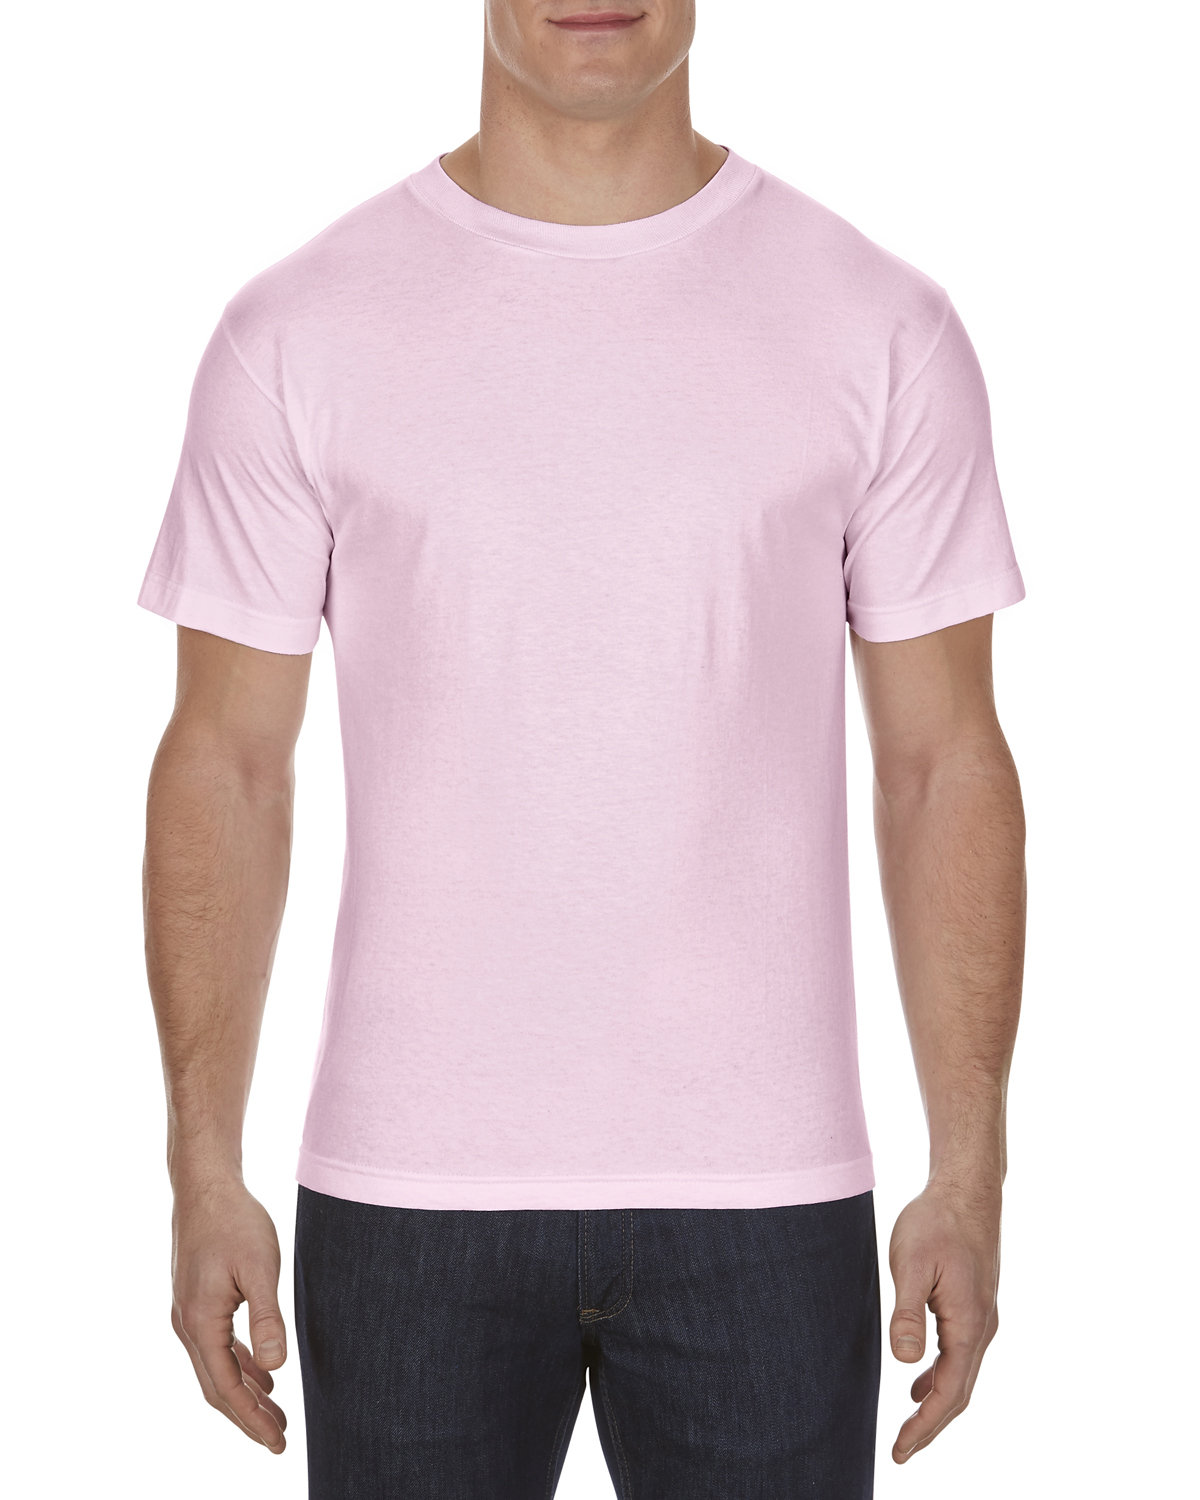 American Apparel Unisex Heavyweight Cotton T-Shirt pink 